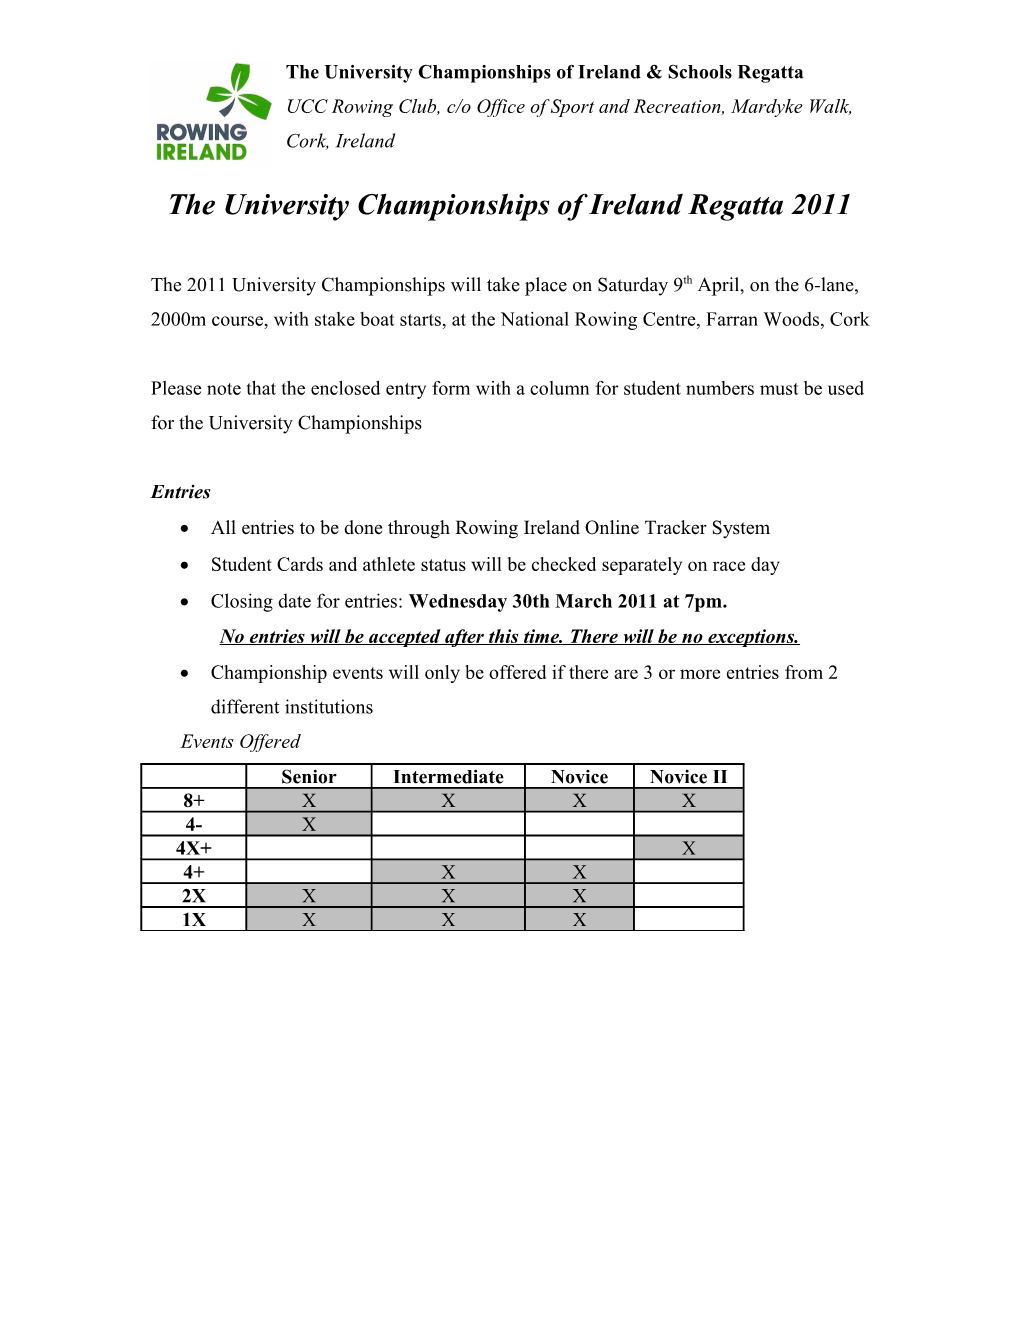 The University Championshipsof Ireland Regatta 2011